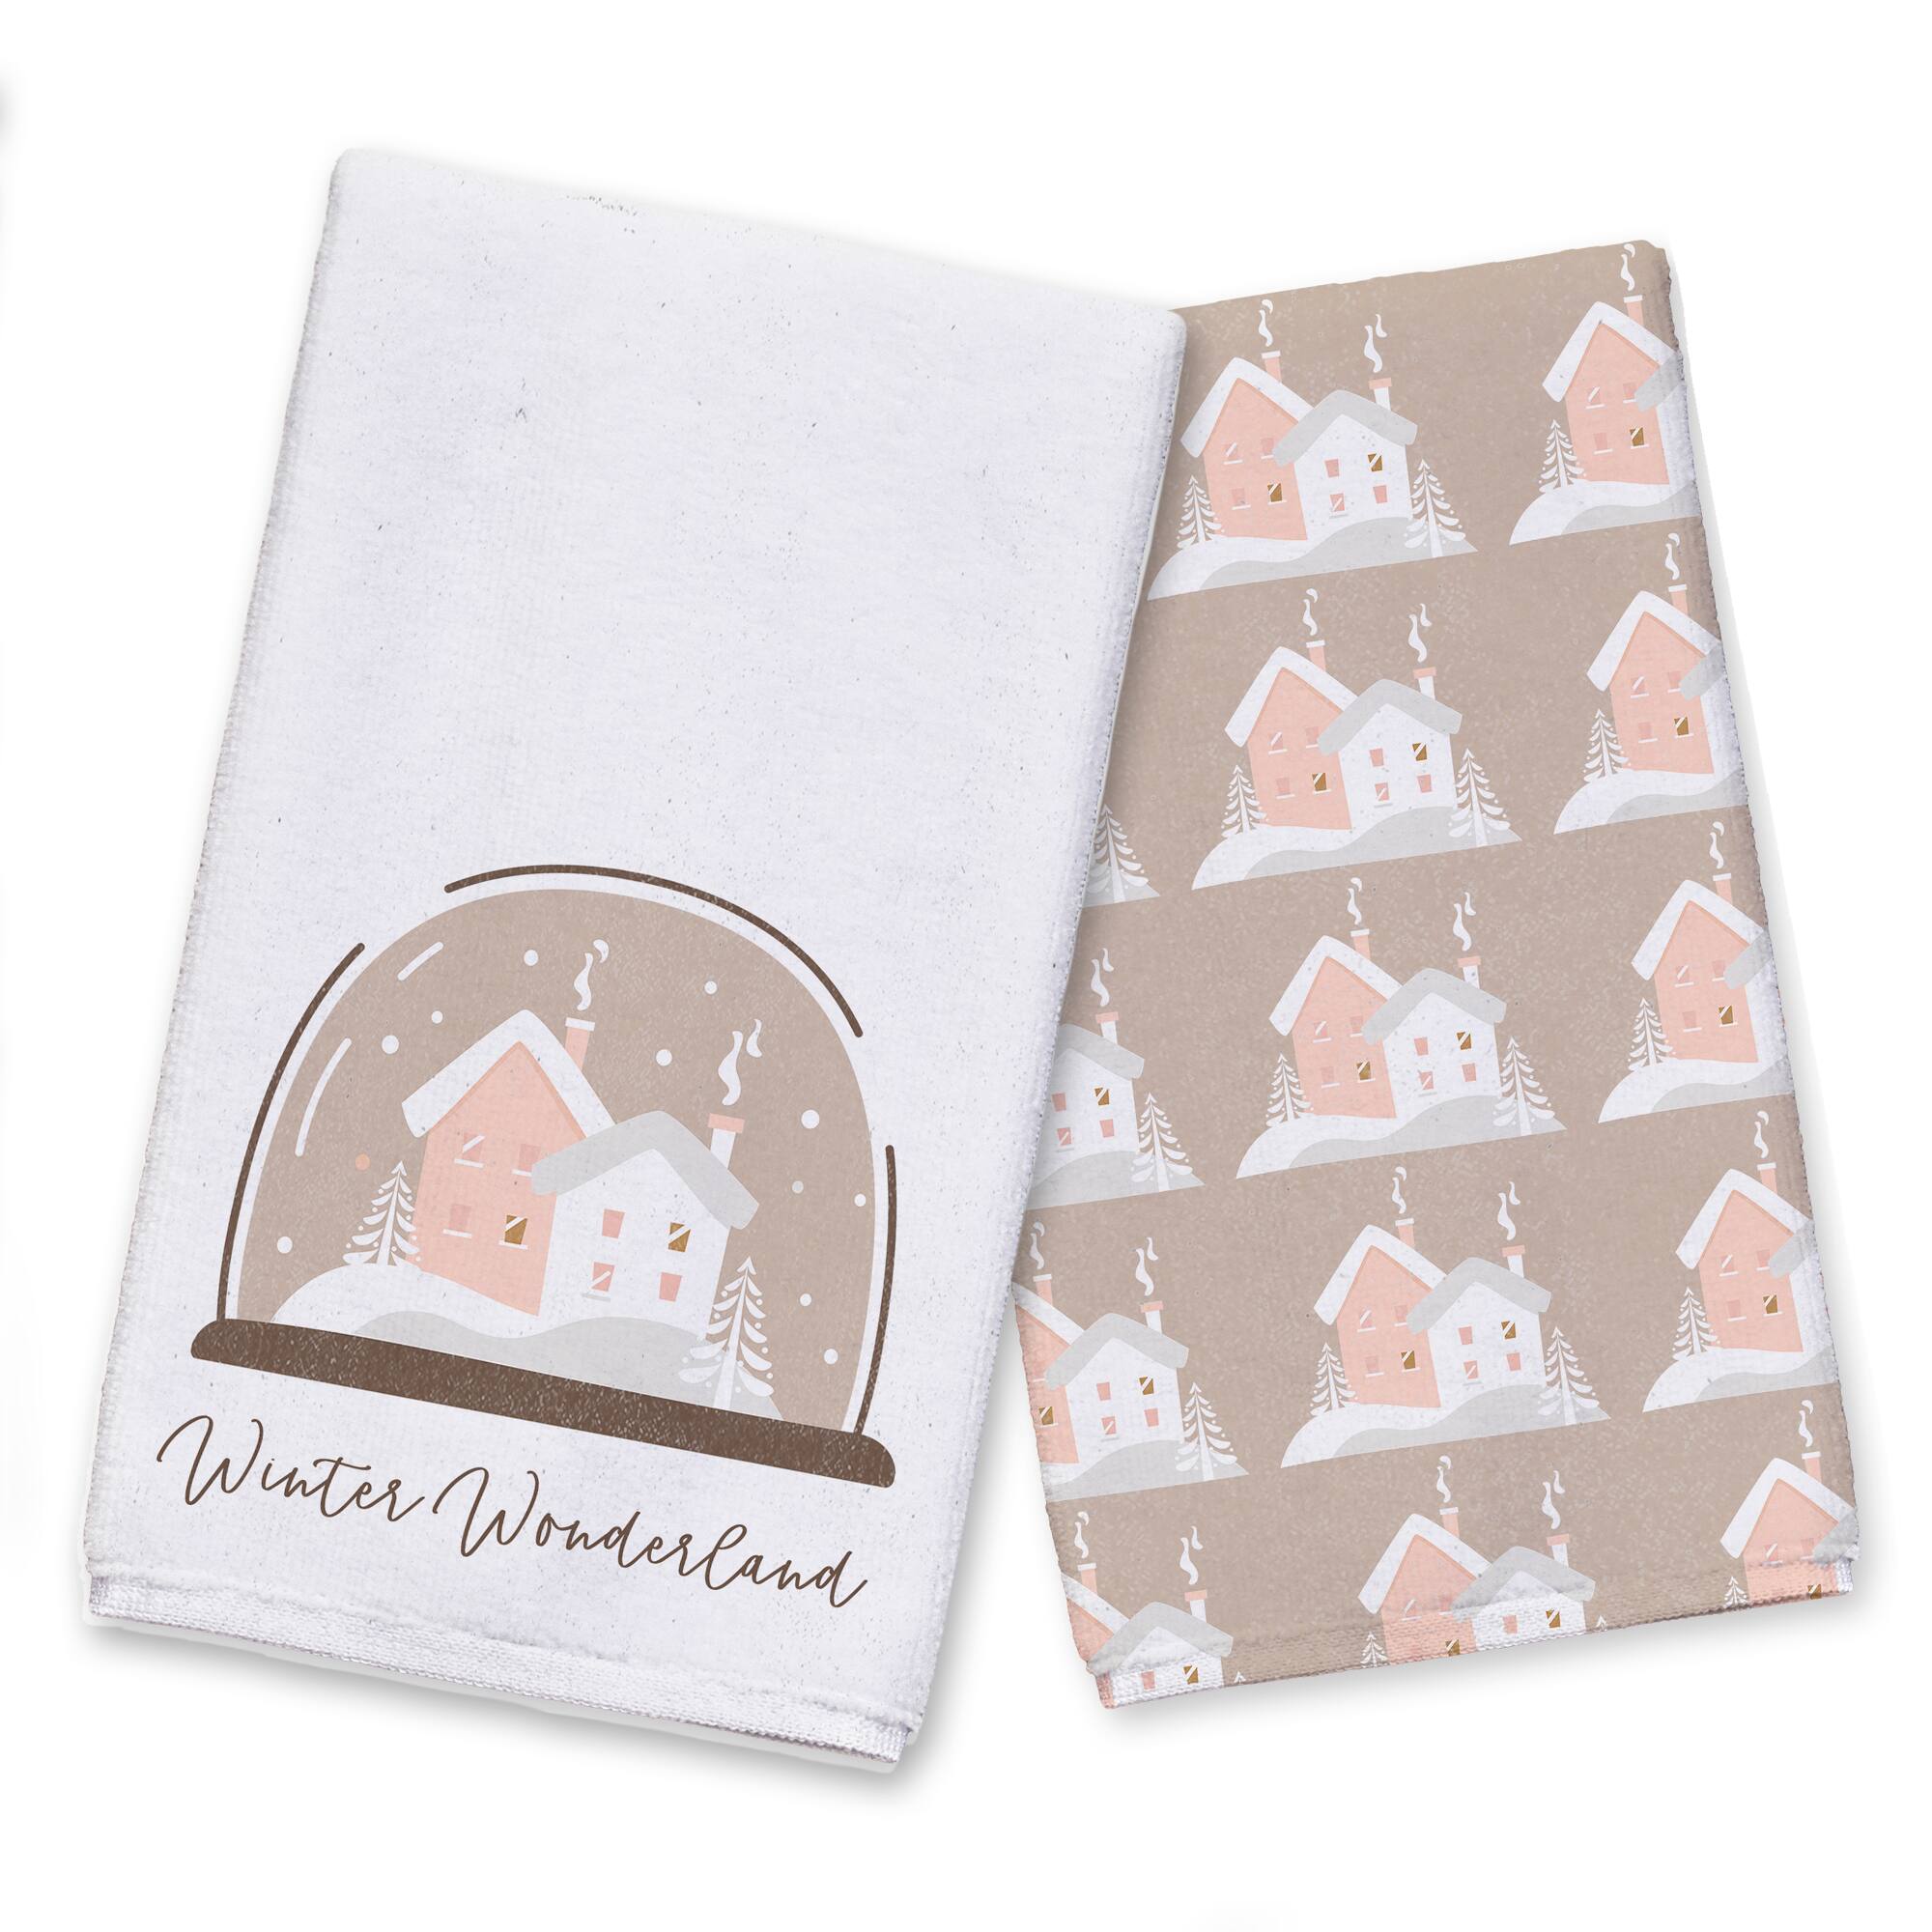 Winter Wonderland Snow Globe Tea Towels - Set of 2